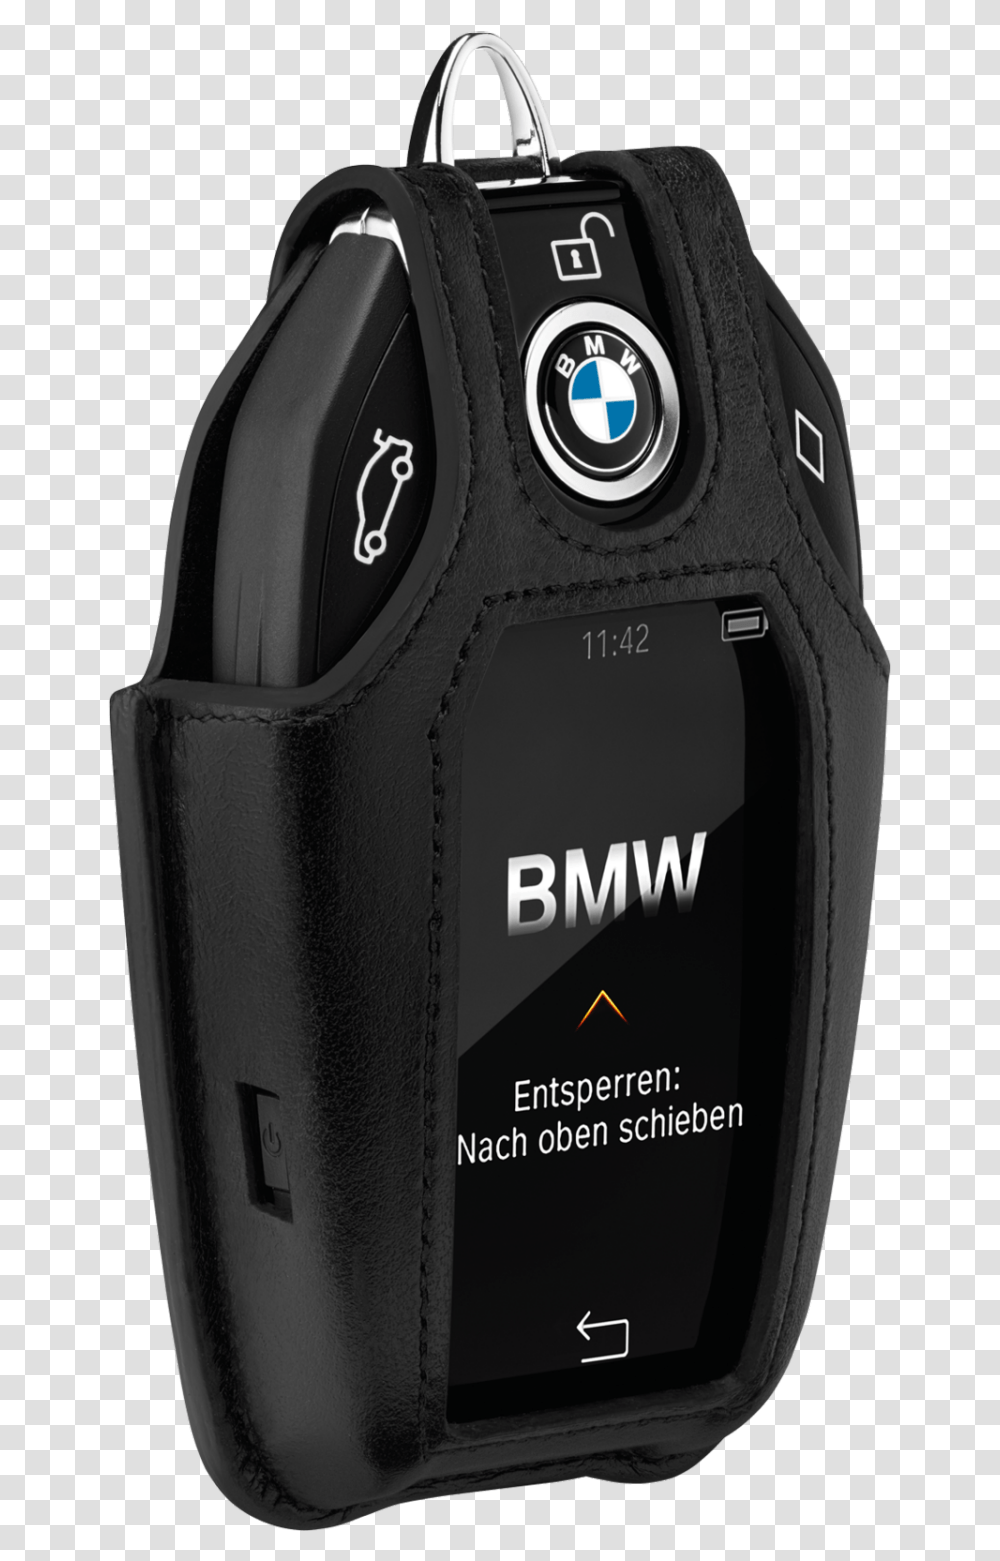 Bmw I8 Montblanc For Bmw Key Sleev 2276665 Bmw Display Key Montblanc, Wristwatch, Electronics, Bottle, Clothing Transparent Png